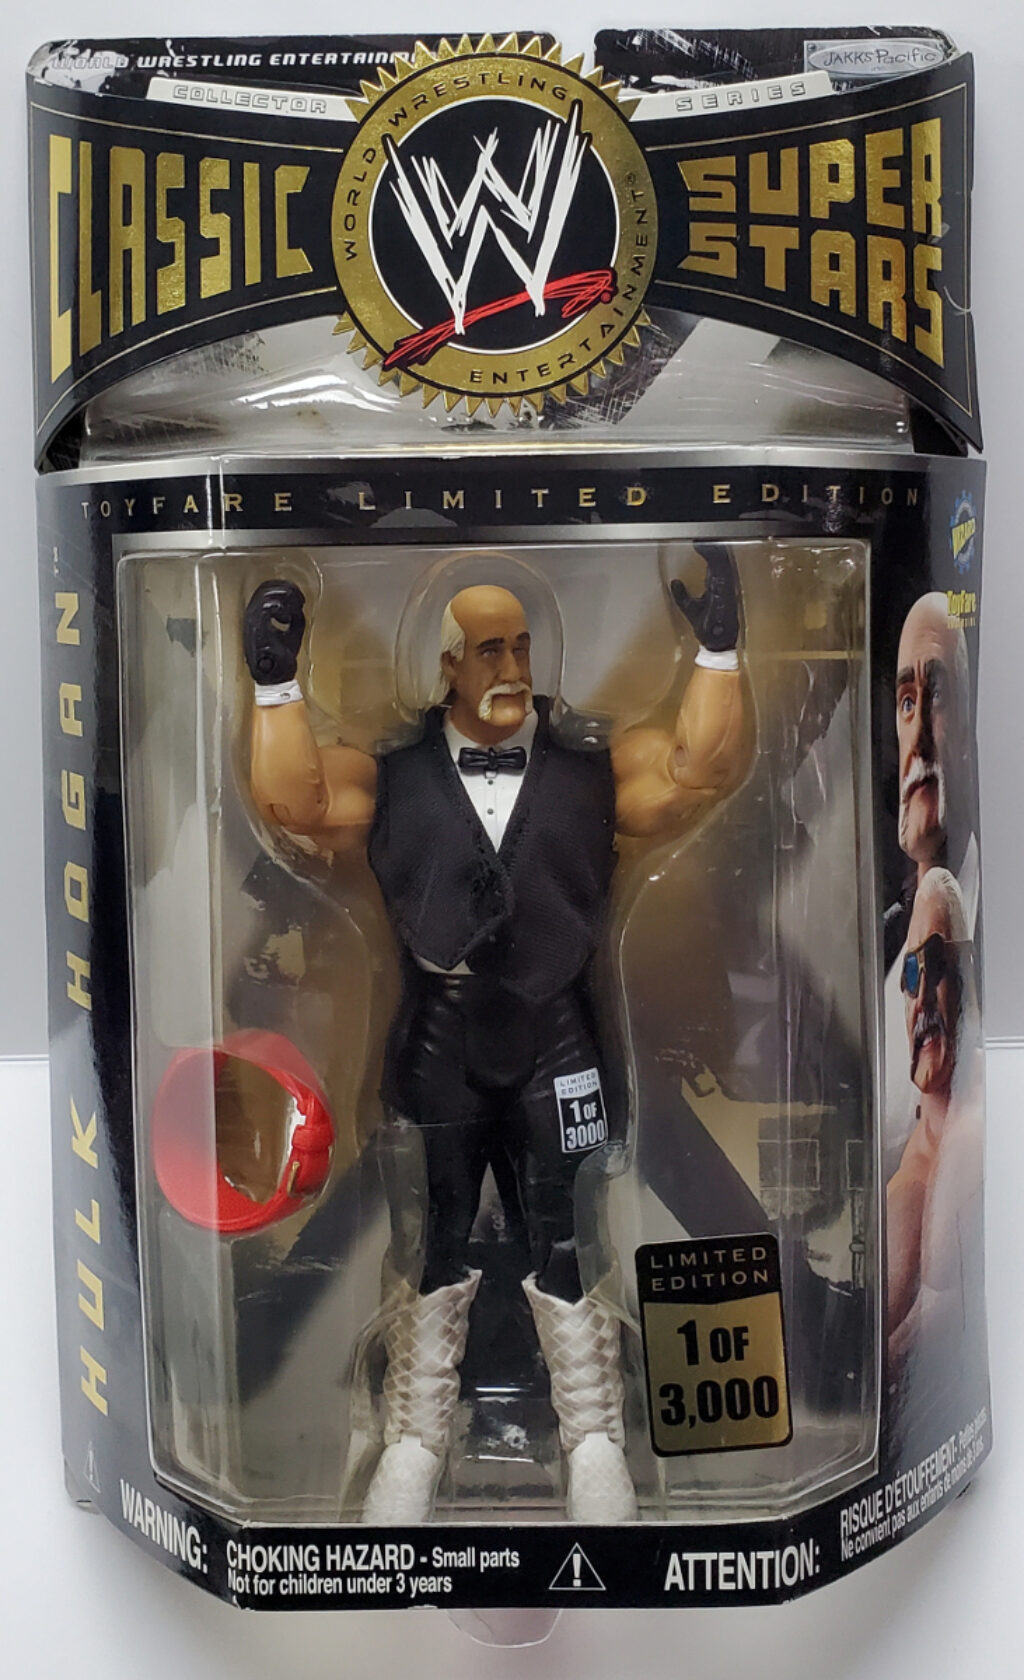 MOC Jakks Pacific Toyfare Limited Edition WWE Classic Superstars Hulk Hogan Action Figure - Factory Sealed 1